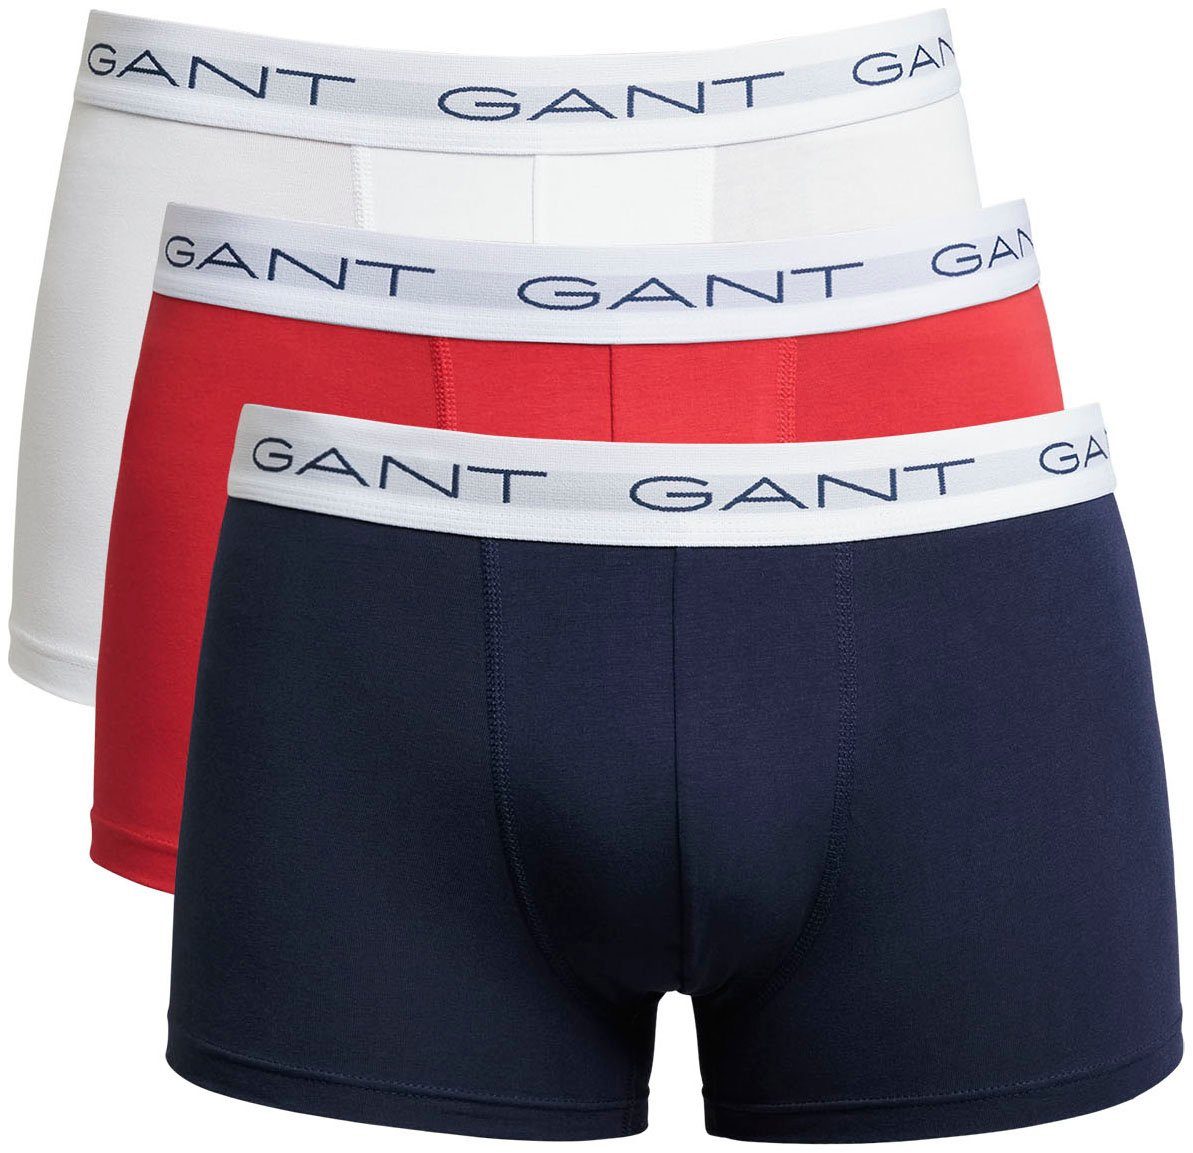 Trunk rot, Gant blau (3er-Pack) weiß,